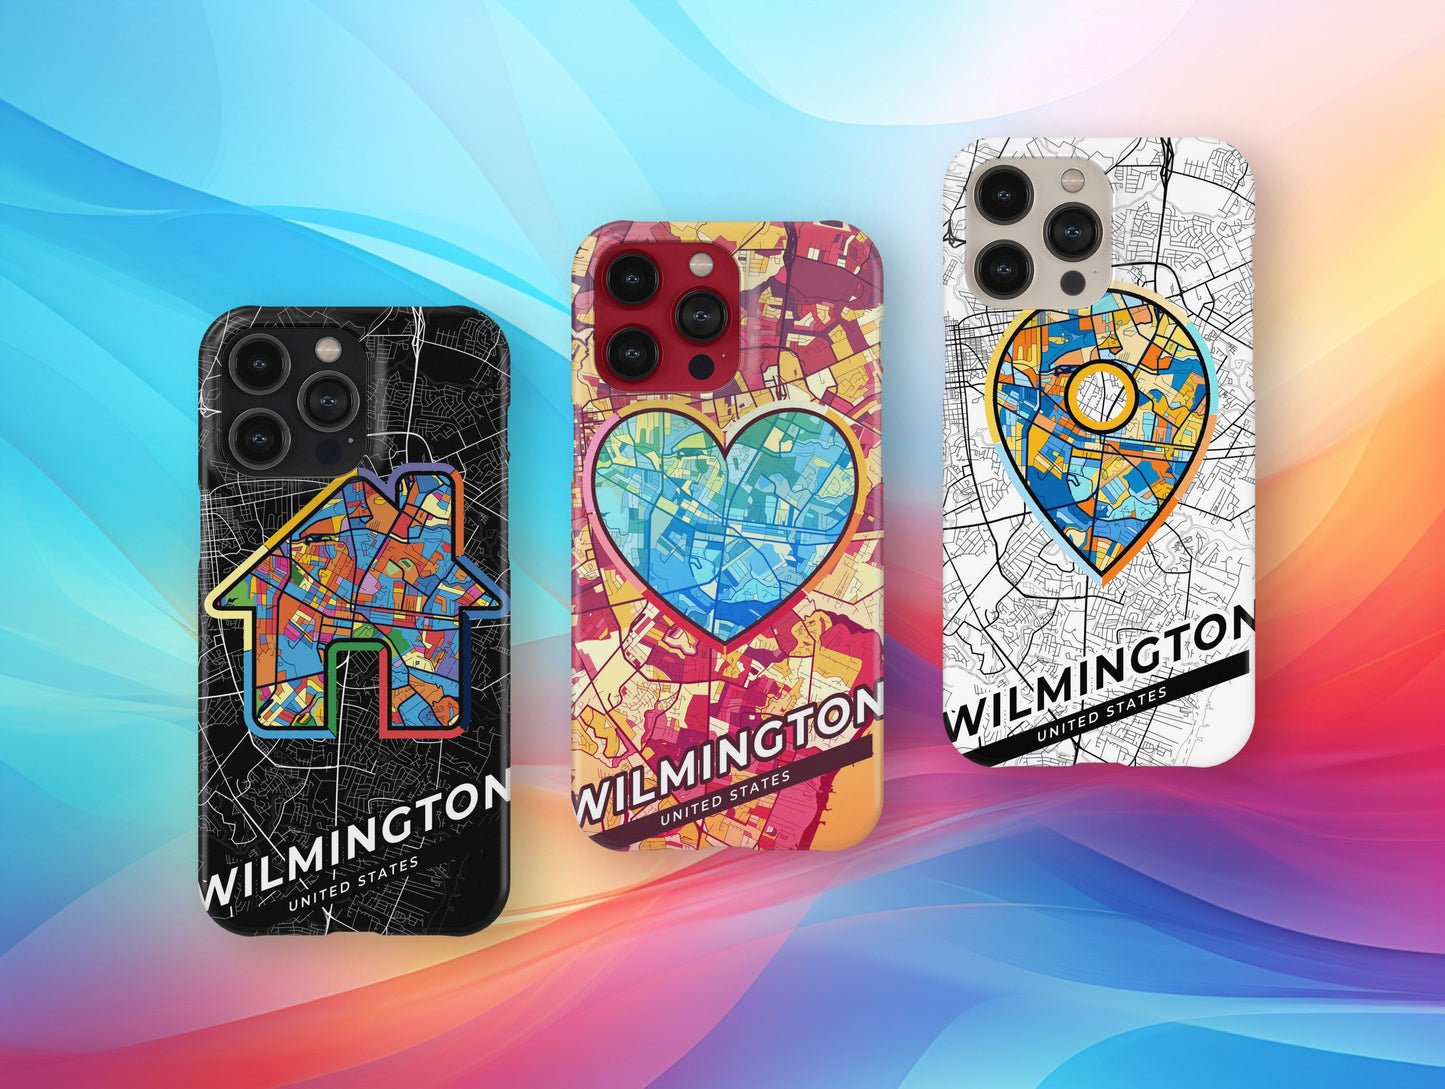 Wilmington North Carolina slim phone case with colorful icon